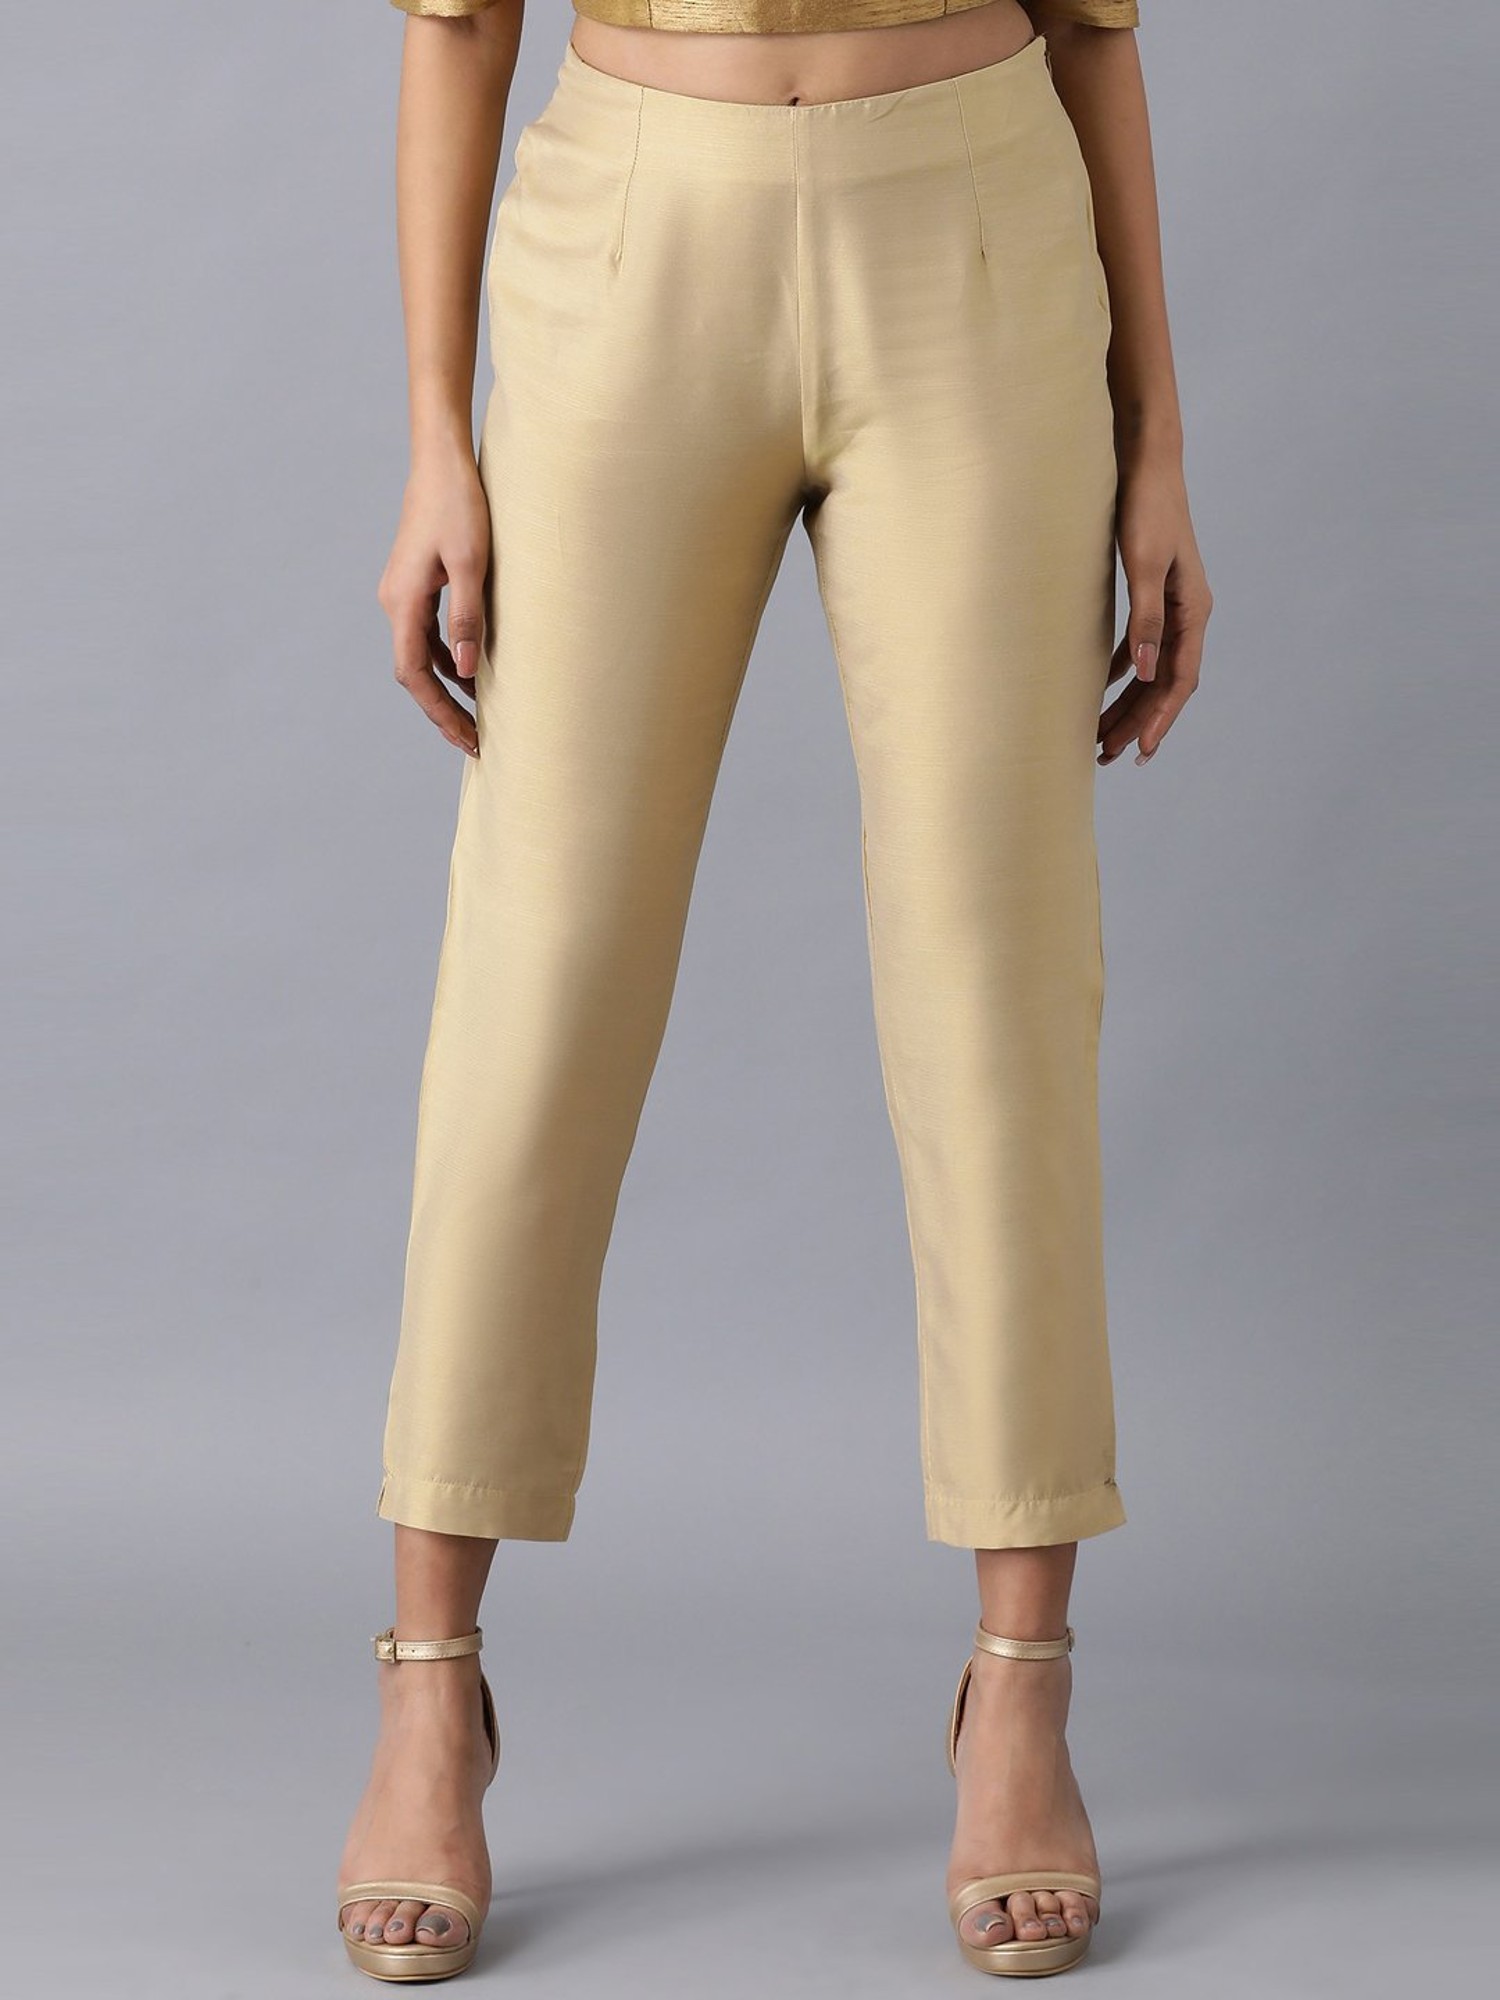 Buy Orange Kurta With Gold Pants by Designer LAJJOO Online at Ogaan.com